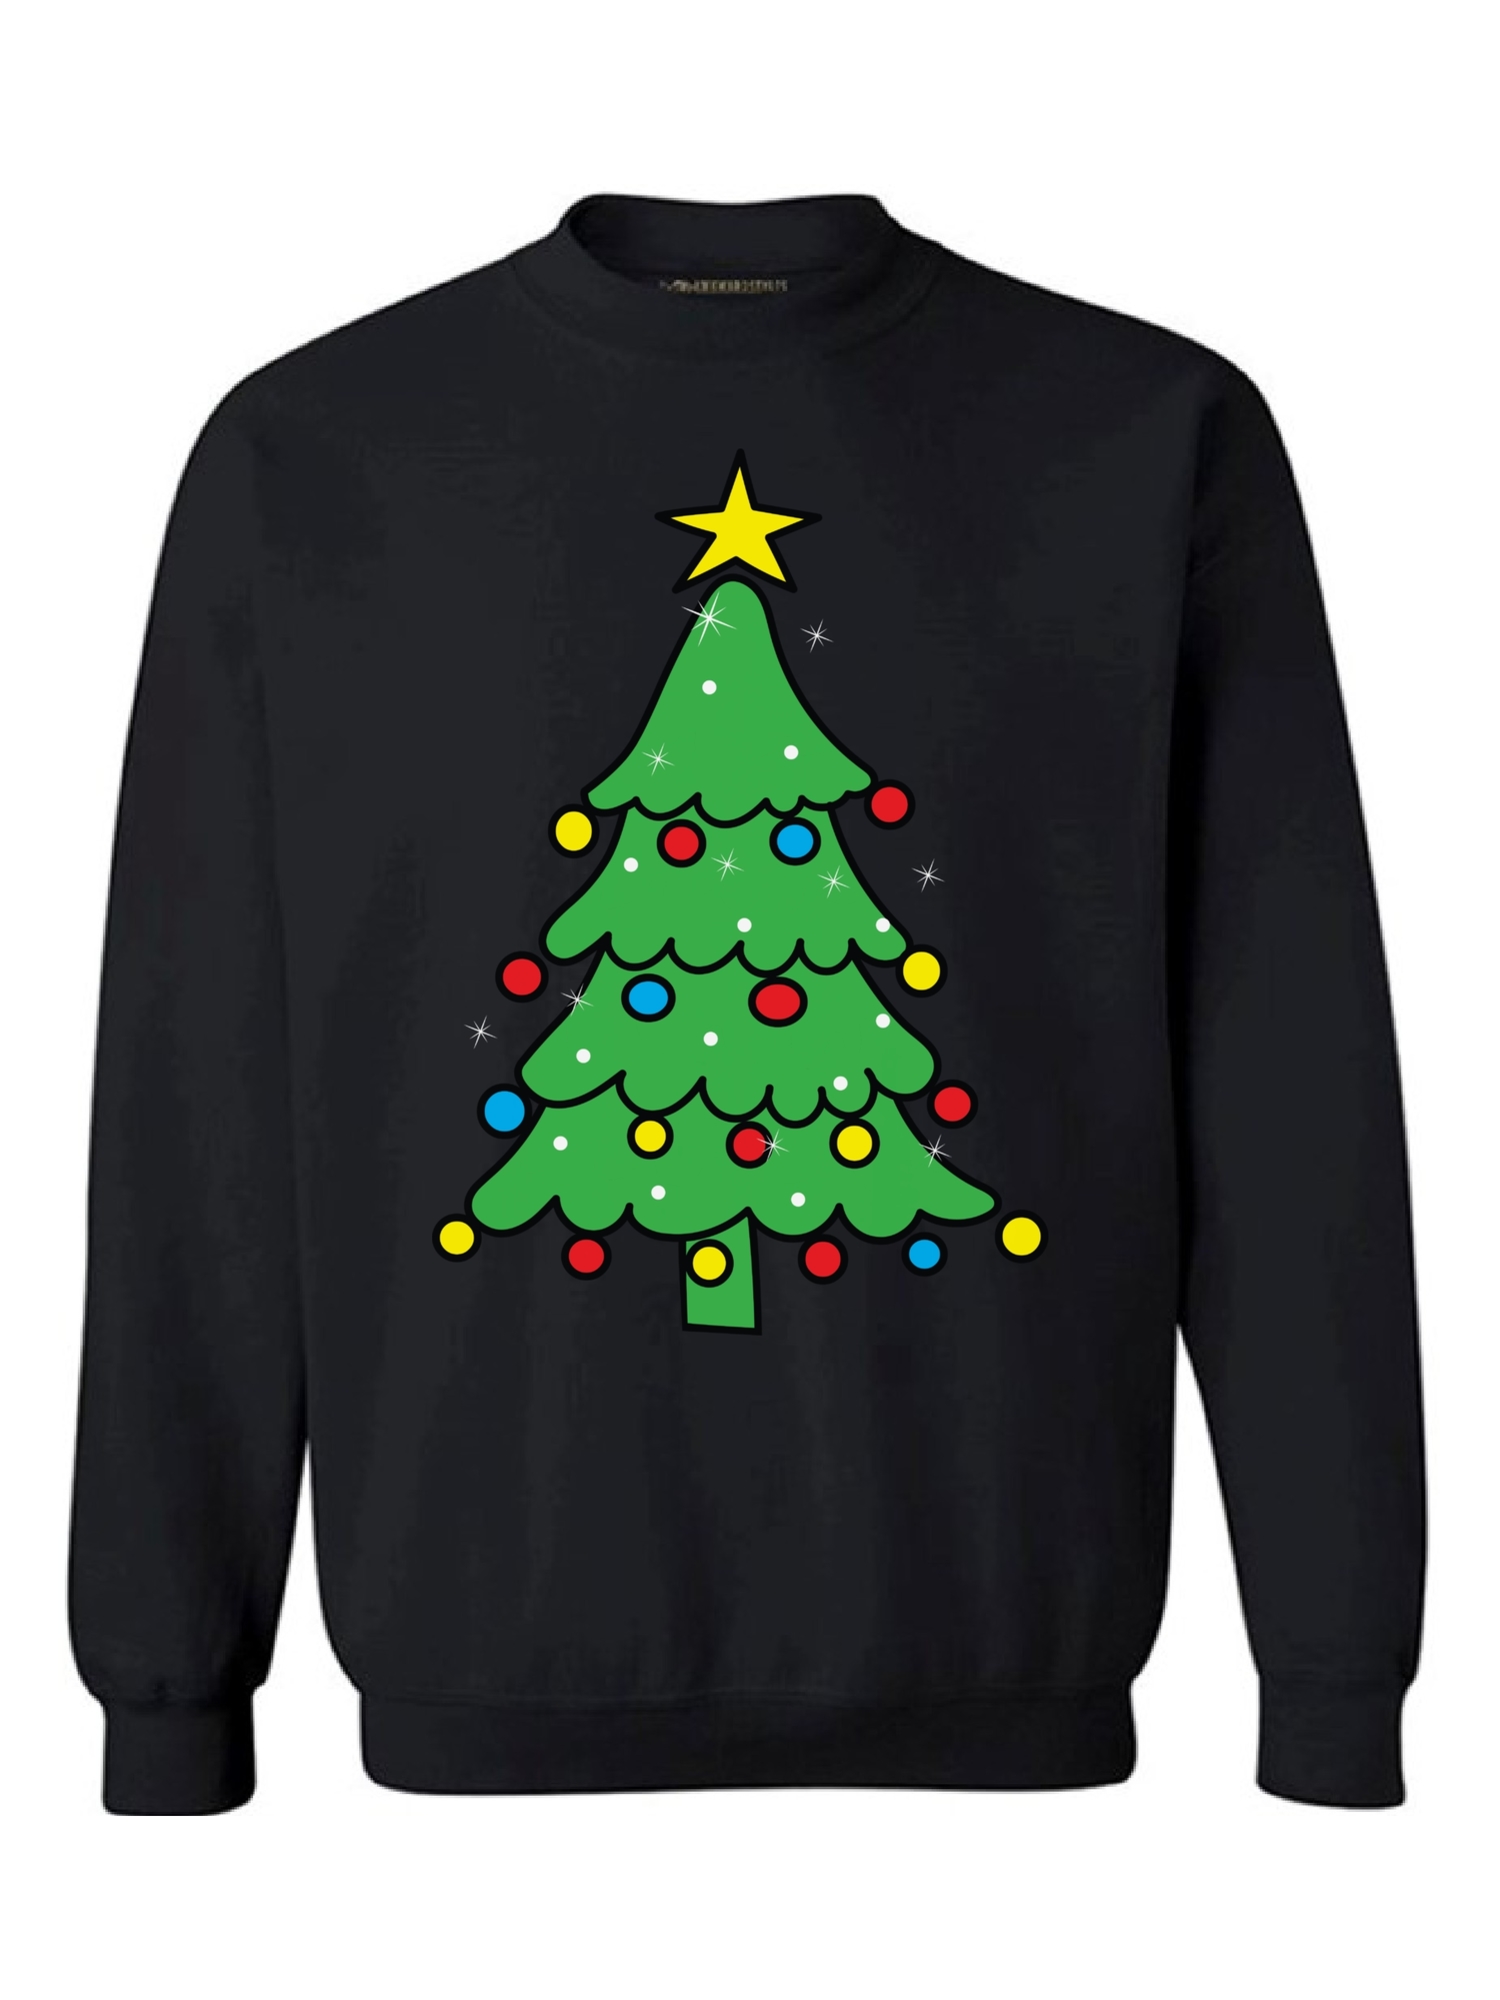 Awkward Styles Christmas Tree Crewneck Christmas Sweatshirt for Men Christmas Tree Sweatshirt for Women Funny Ugly Christmas Tree Sweater Christmas Tree Outfit Ugly Sweater Unisex Sweatshirt - image 1 of 5